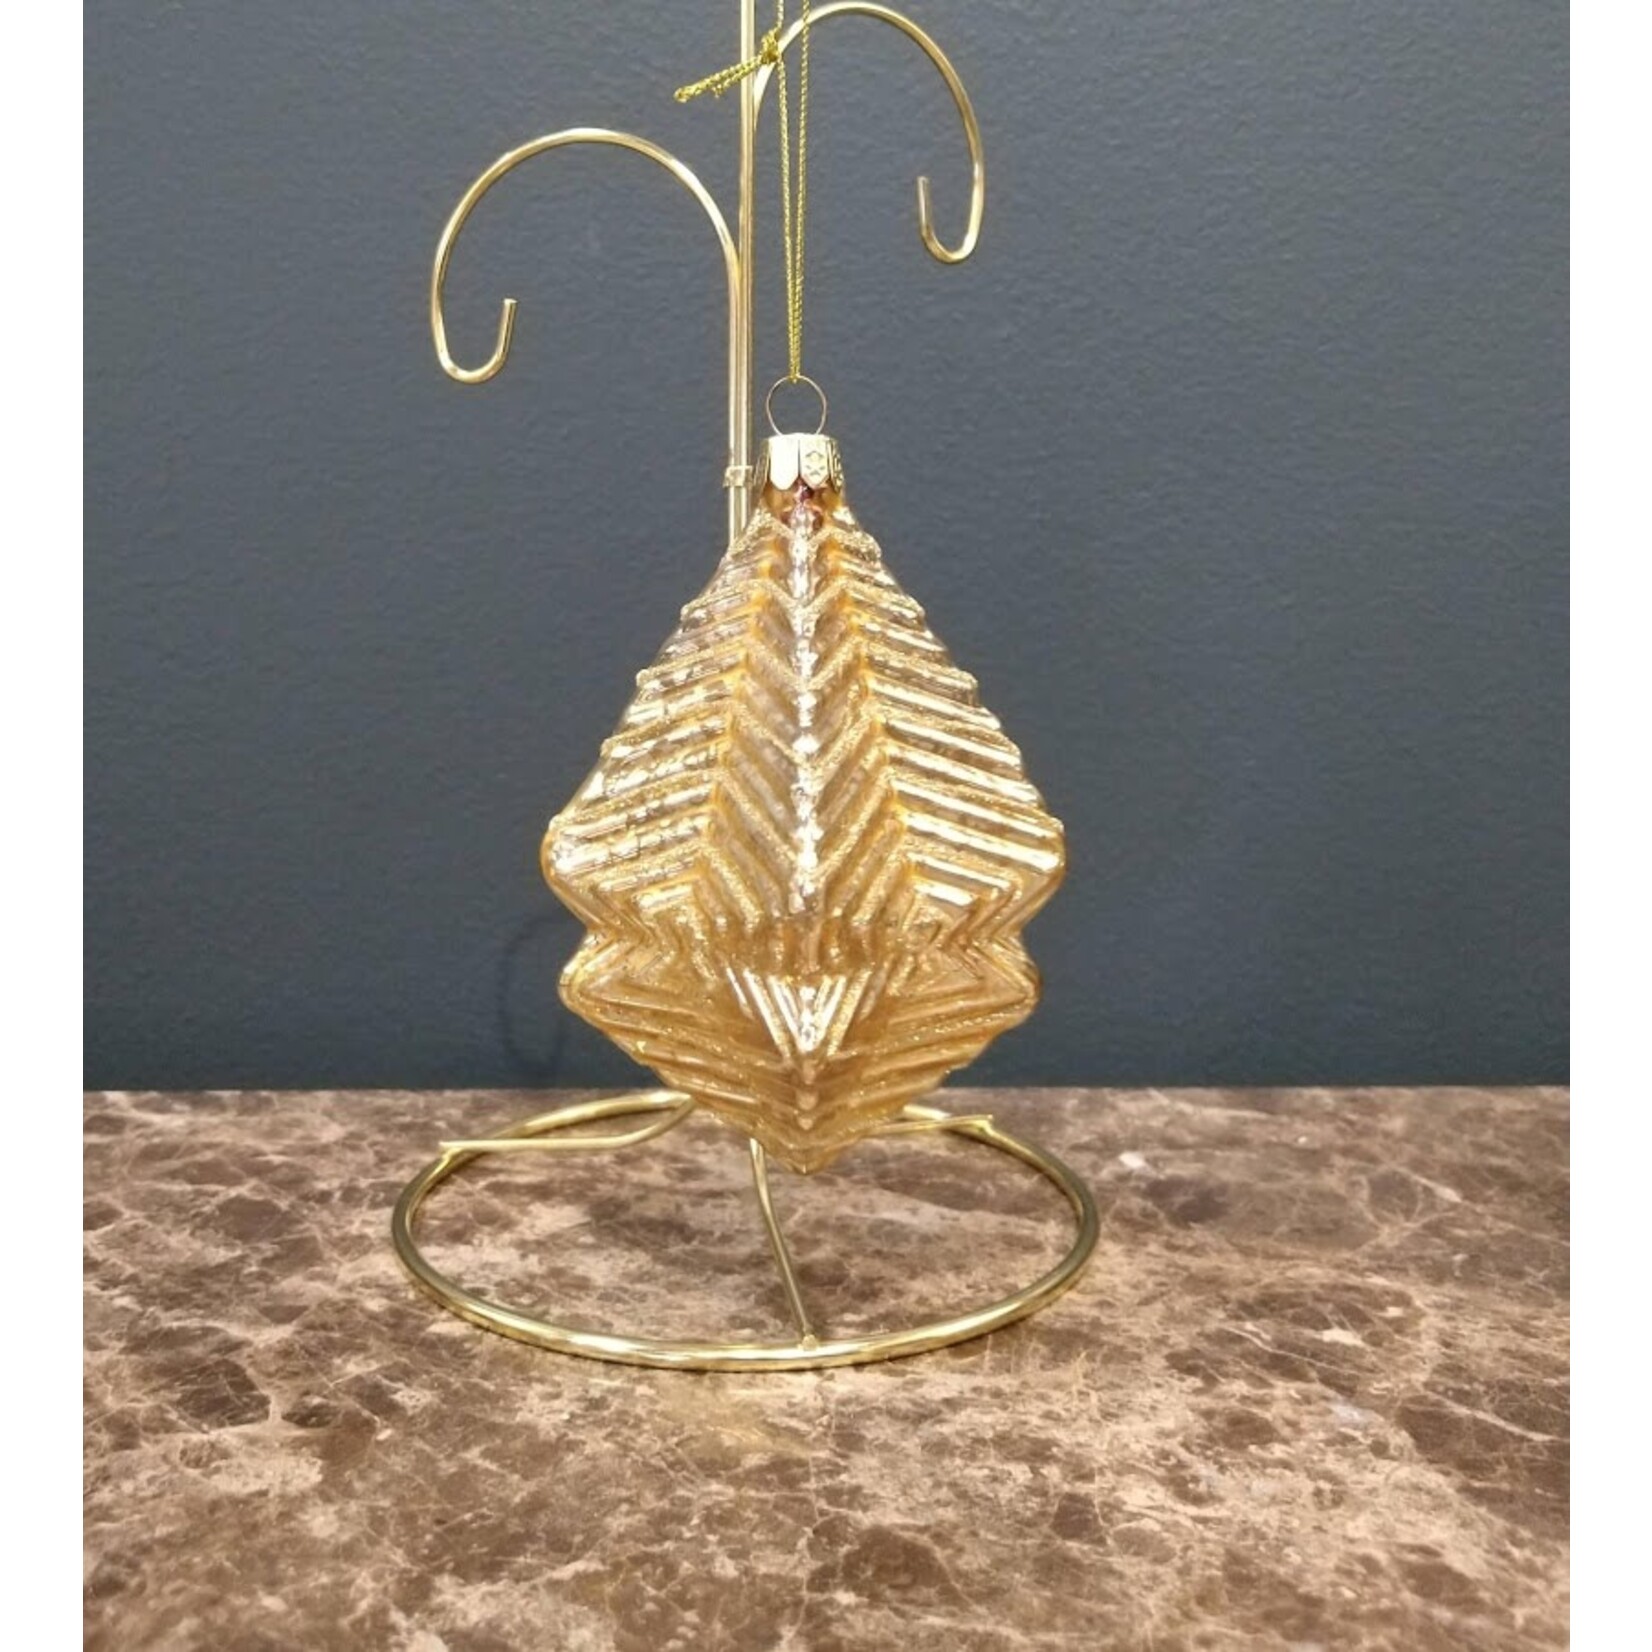 Two's Company Metallic Glass Ornament Medium